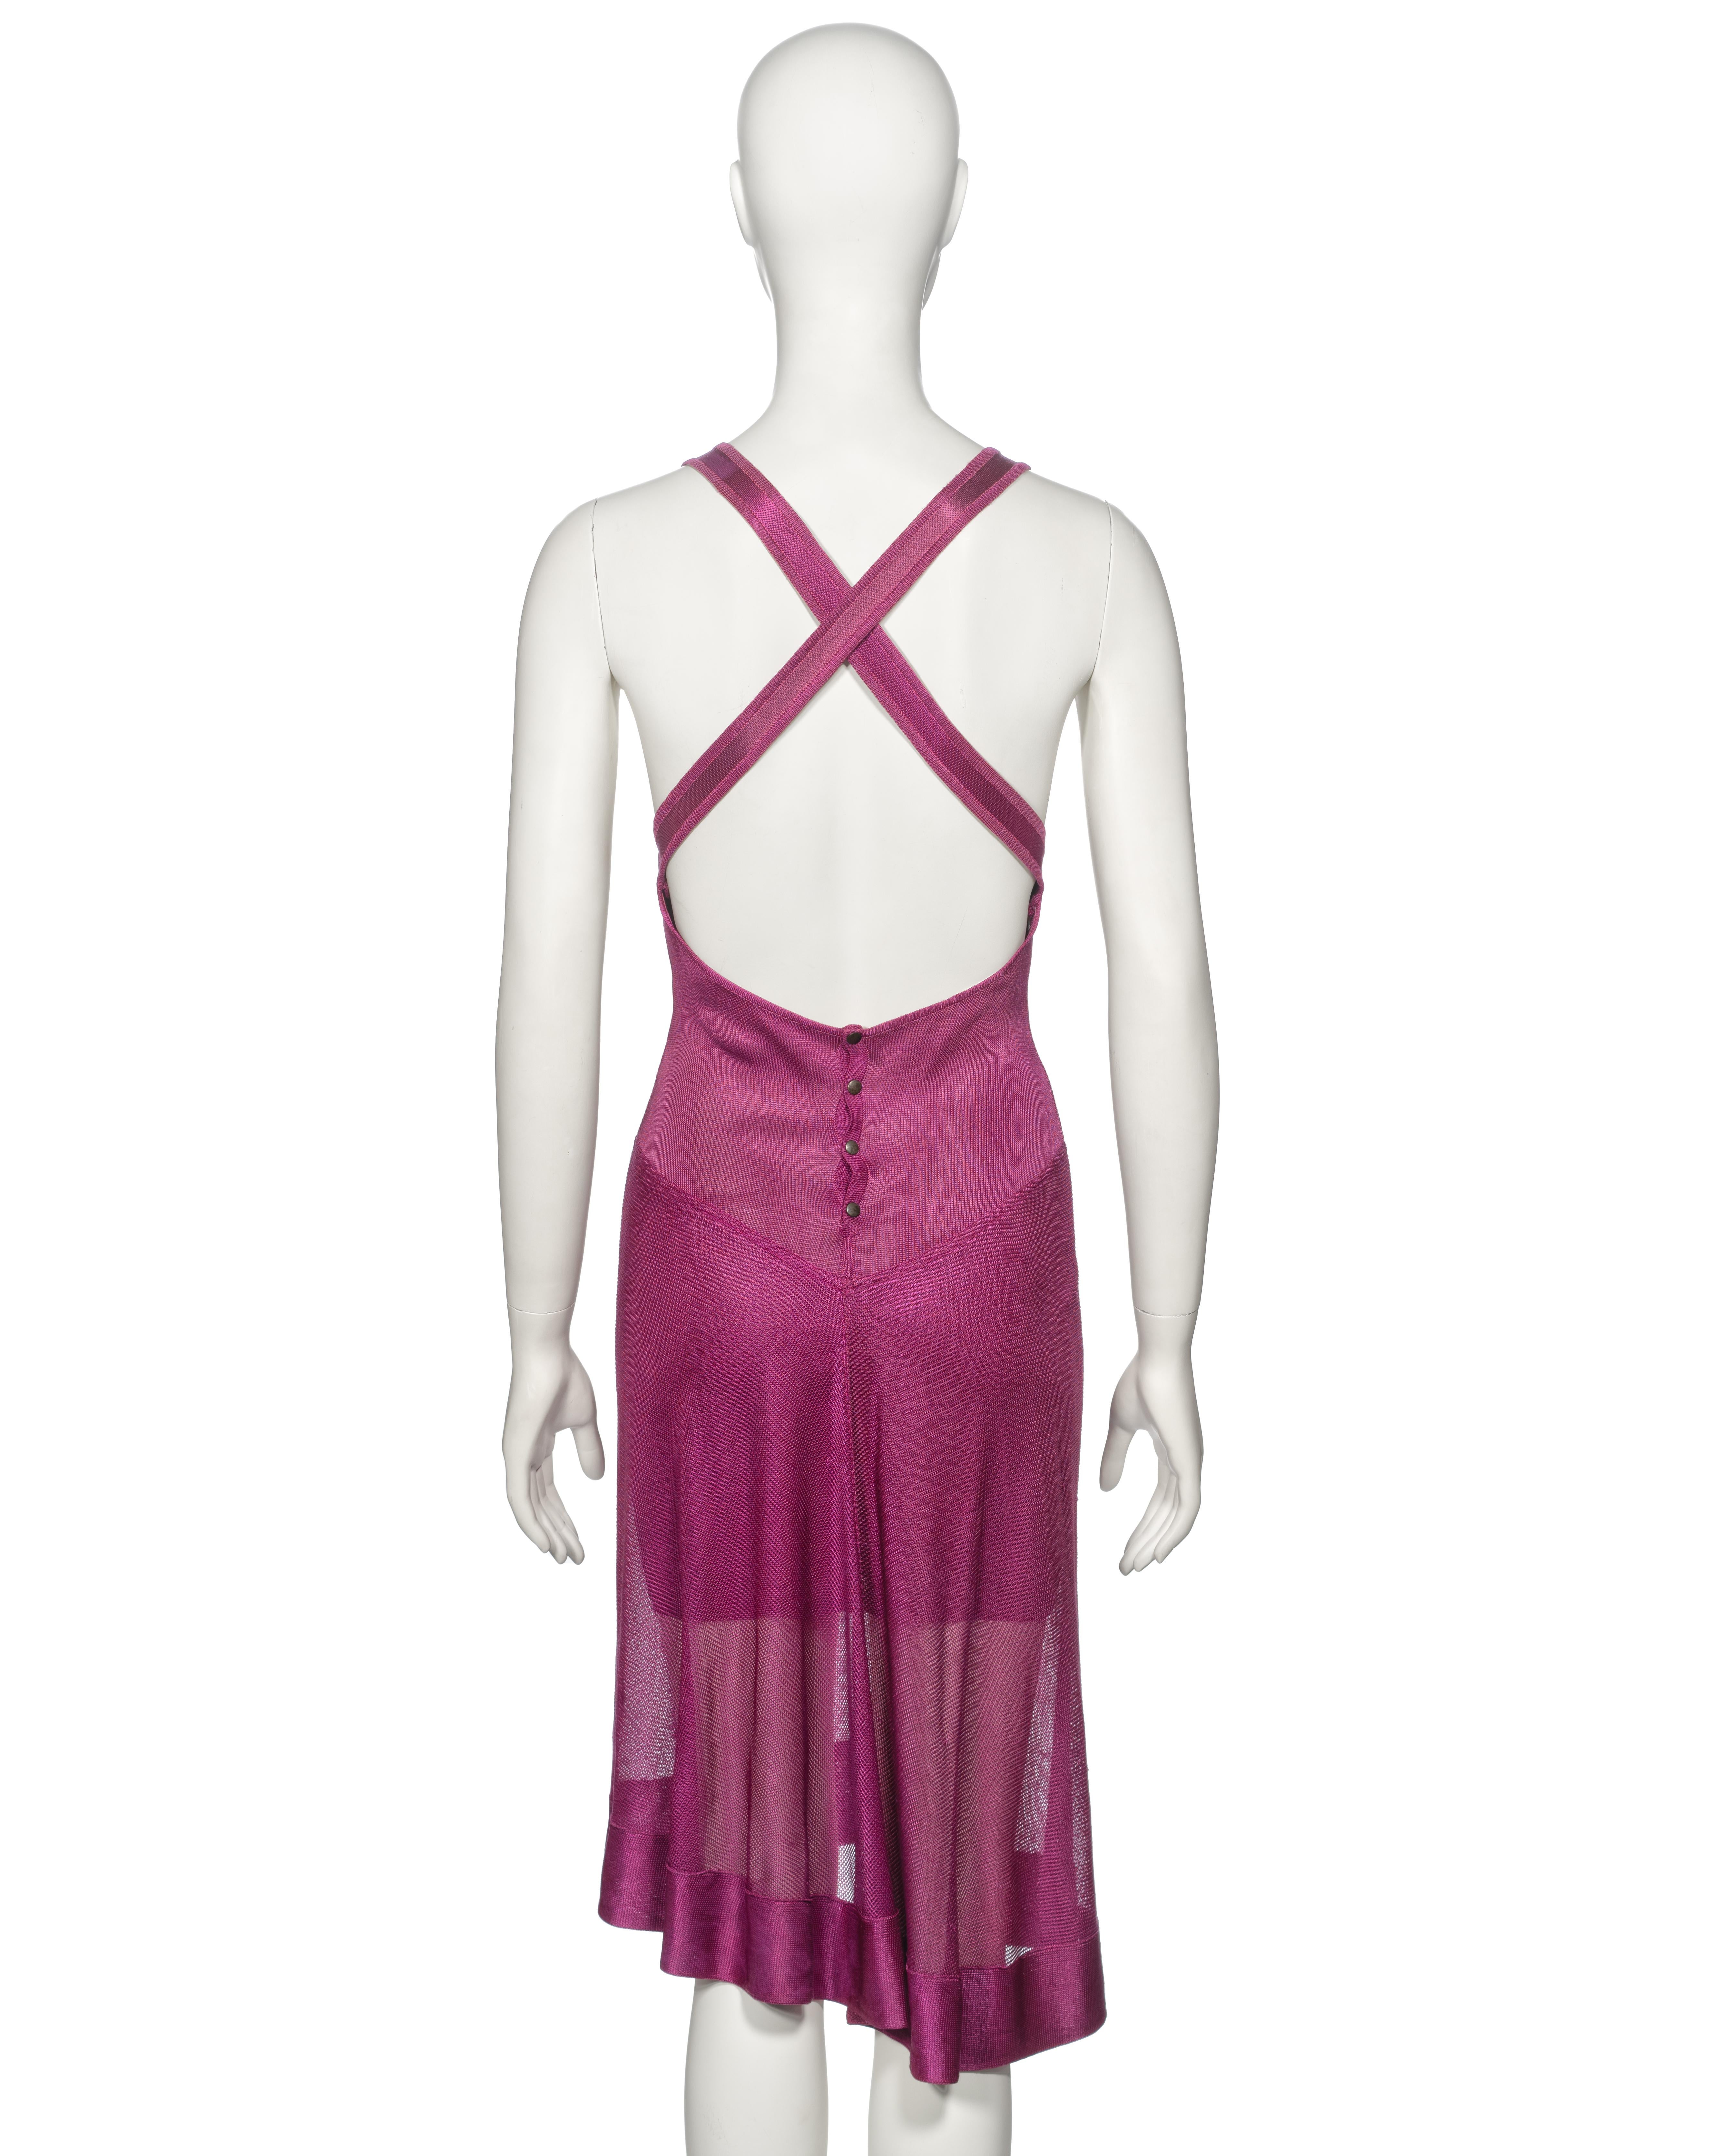 Azzedine Alaia Magenta Acetate Knit Cocktail Dress, ss 1986 For Sale 6